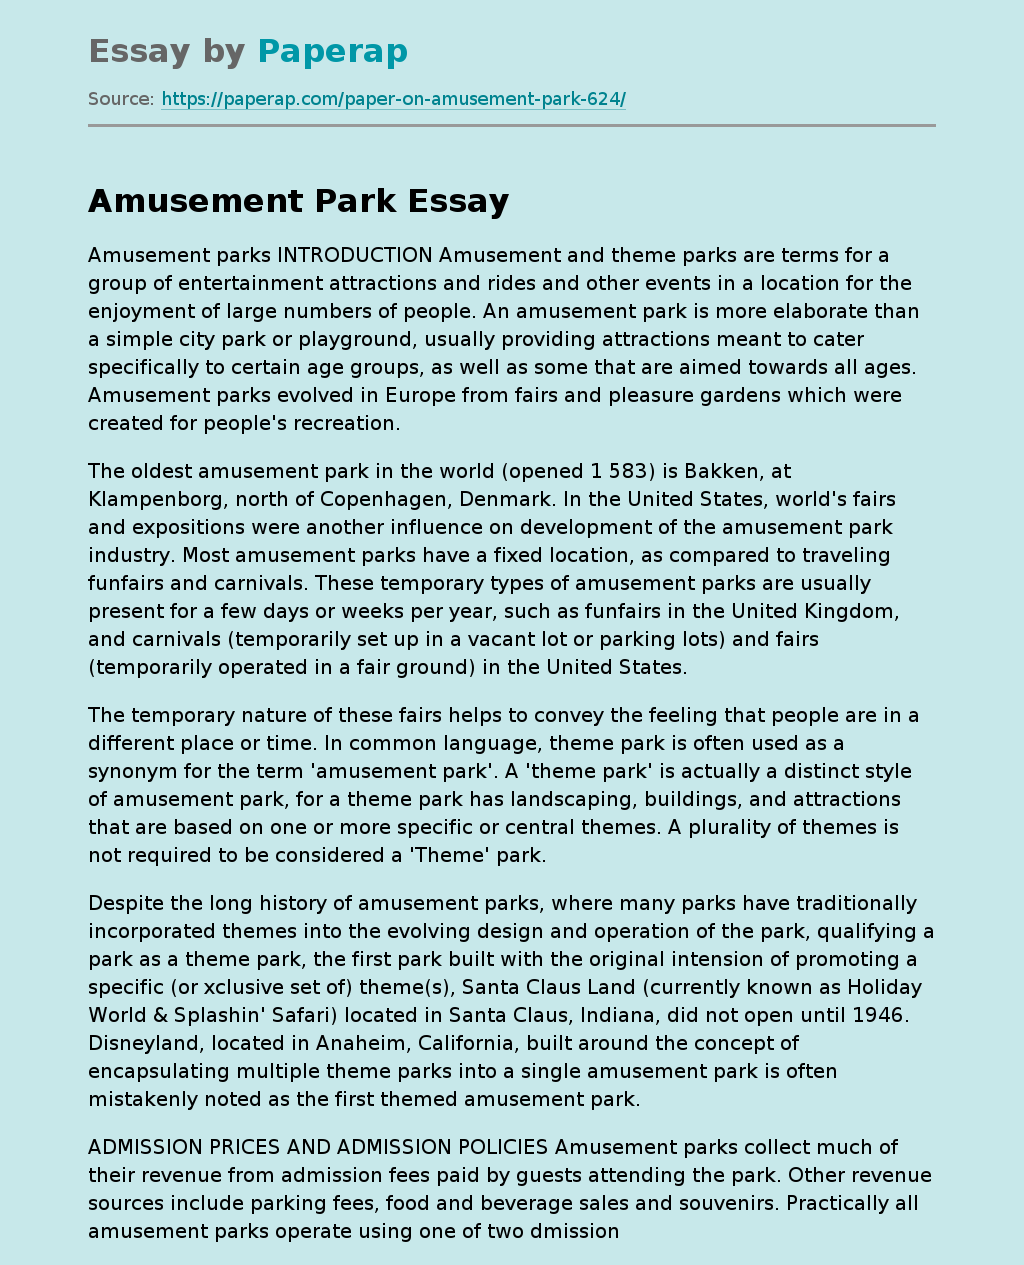 Introduction to Amusement Parks